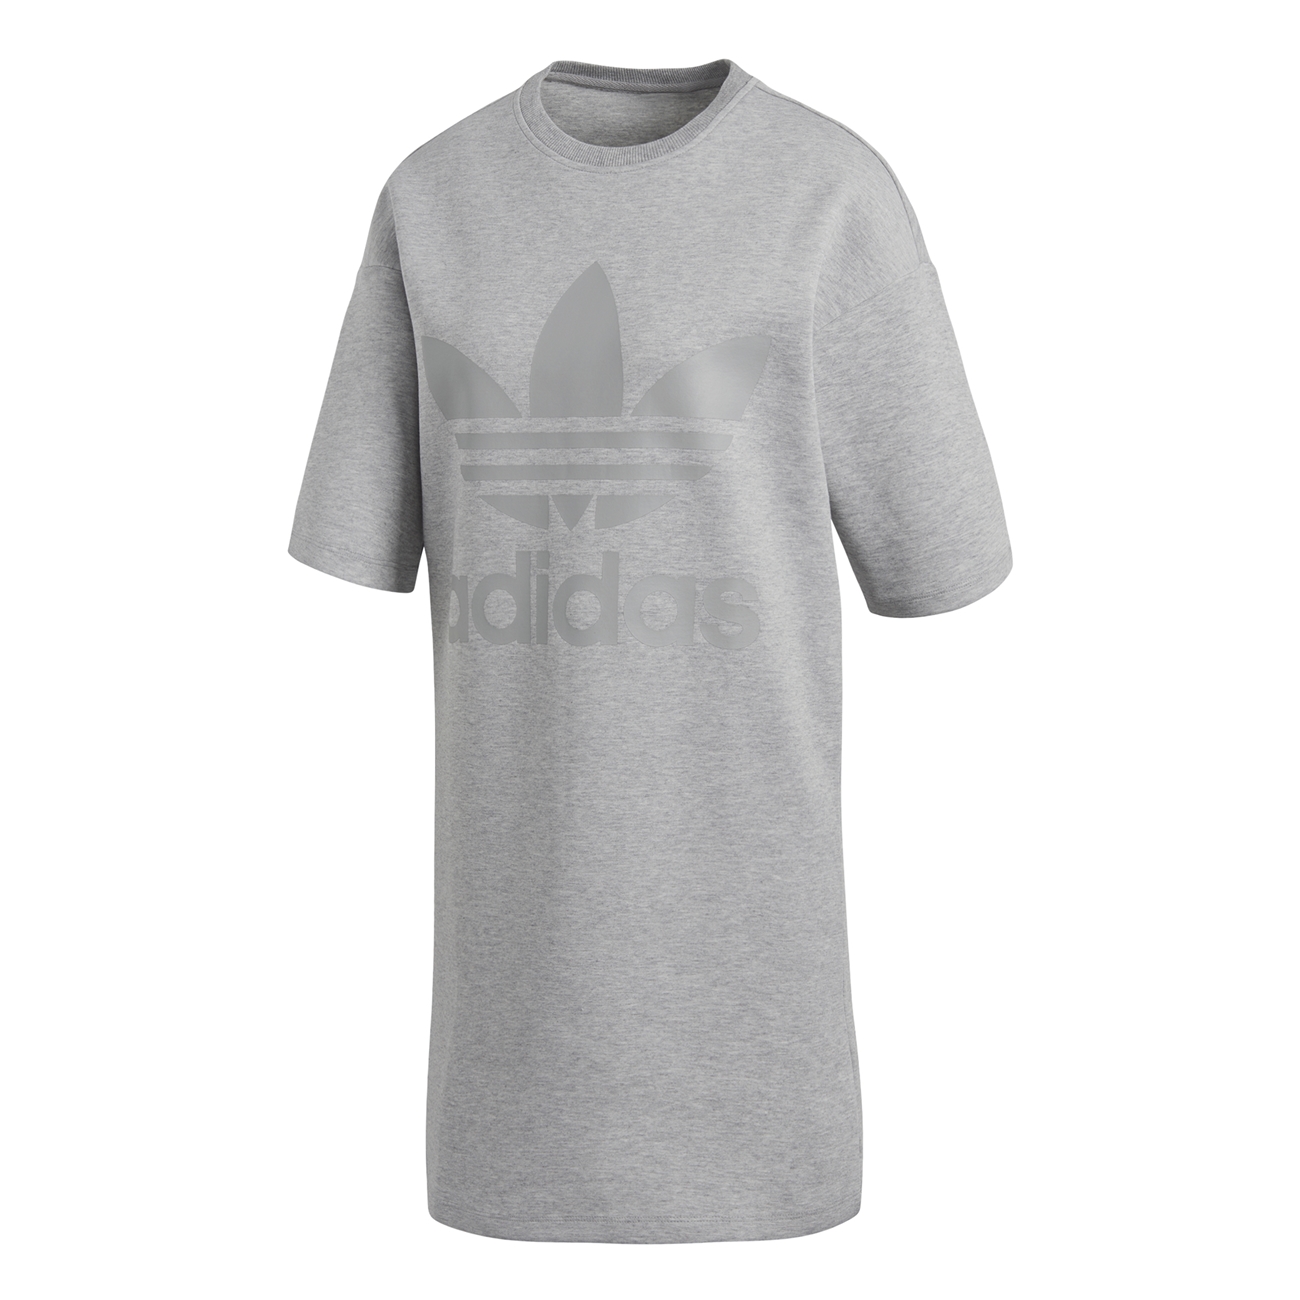 Adidas Originals Trefoil Dress - manelsanchez.com